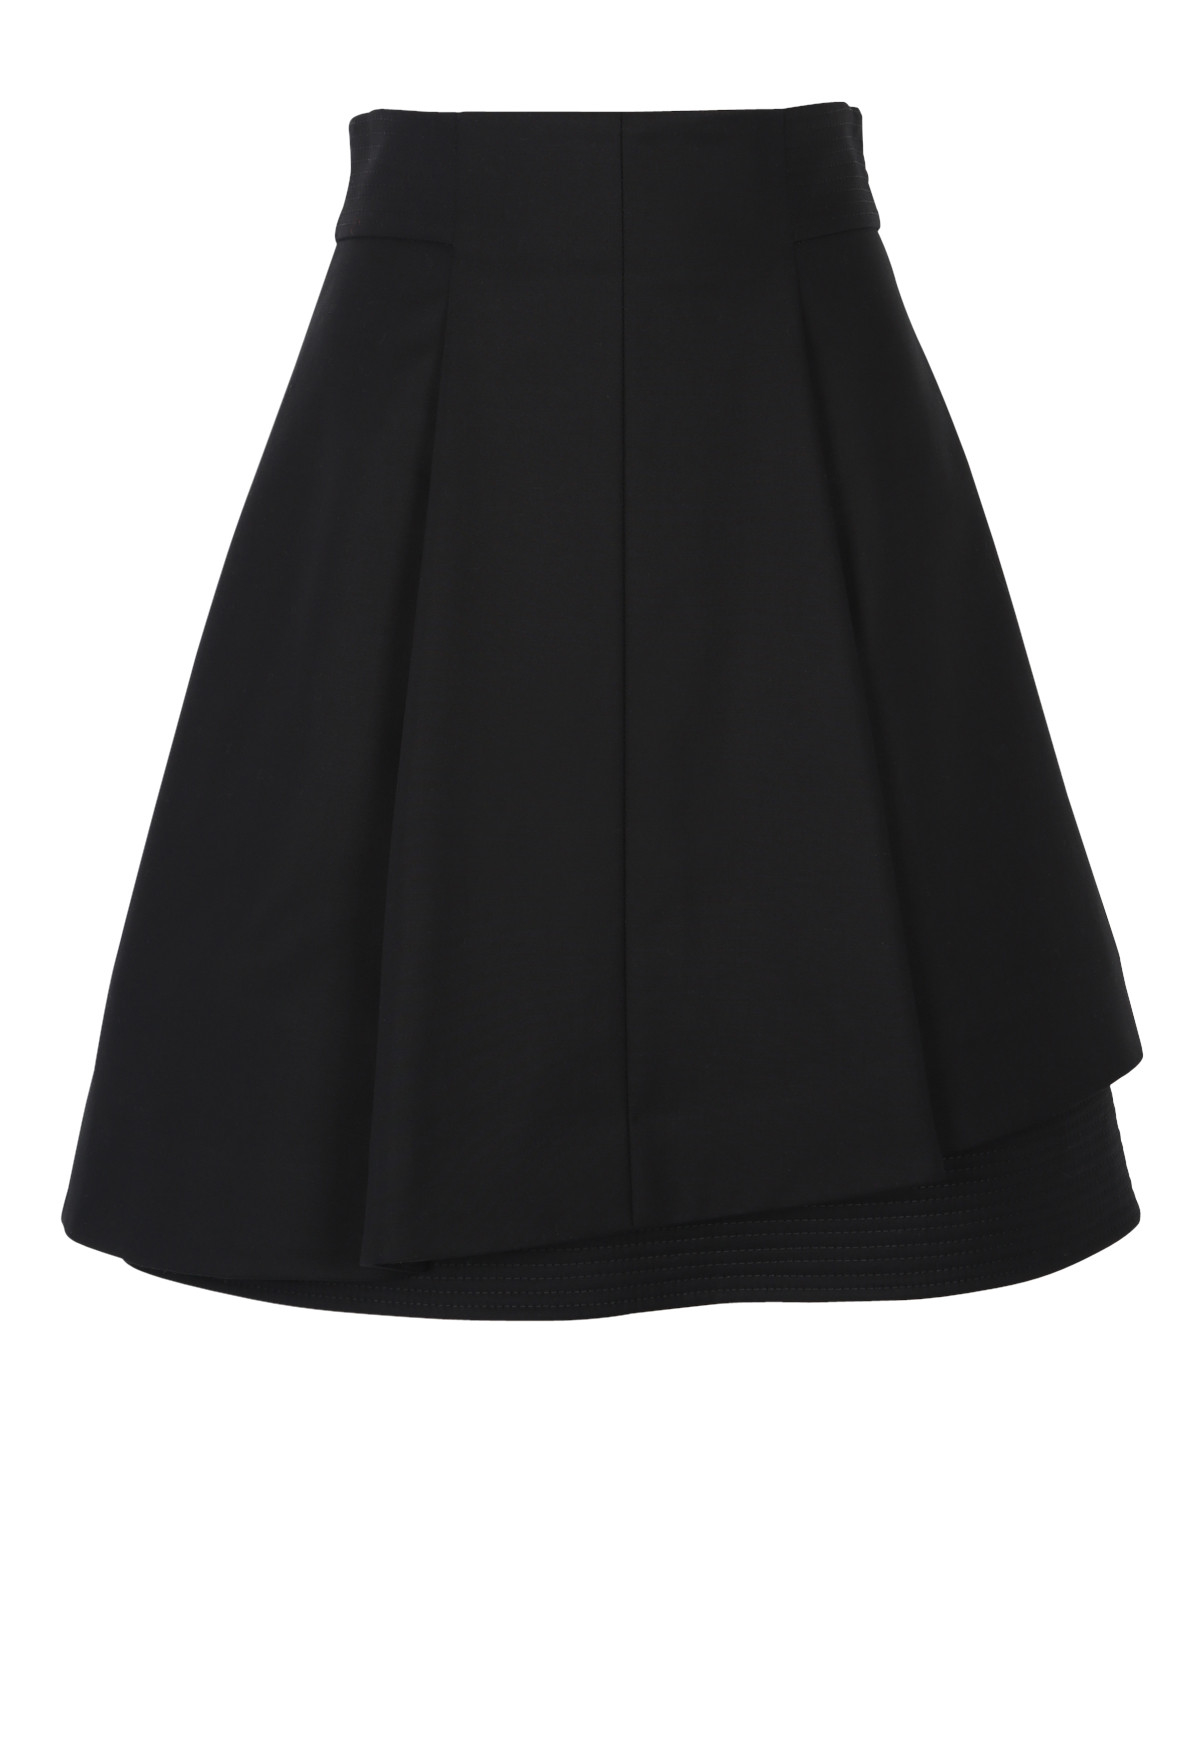 Lyst - Dorothee Schumacher Bold Silhouette Skirt in Black